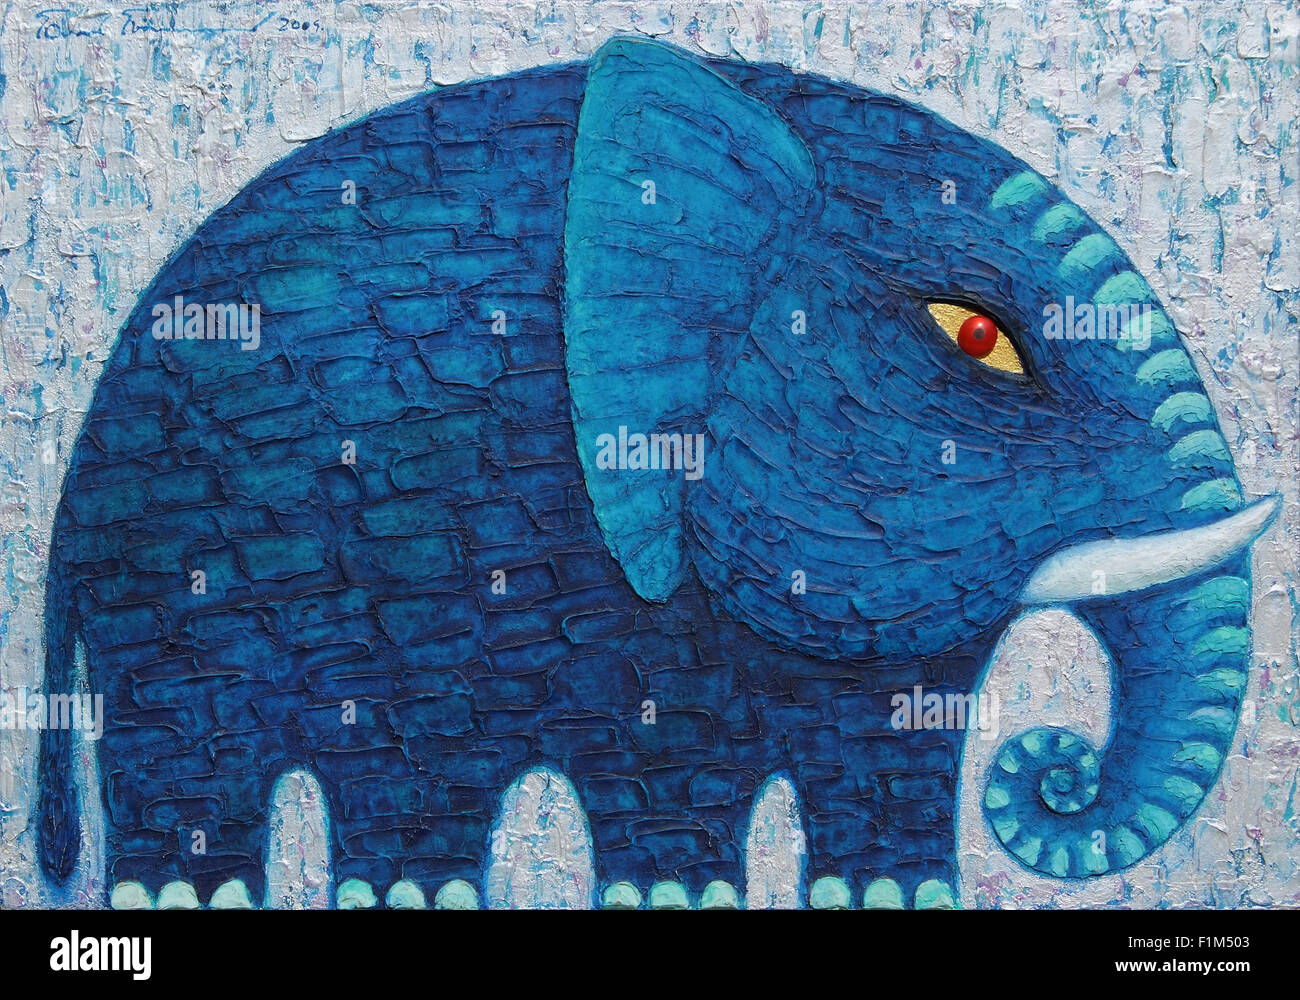 Blue Elephant on Silver background. Original acrylic painting on canvas. Stock Photo